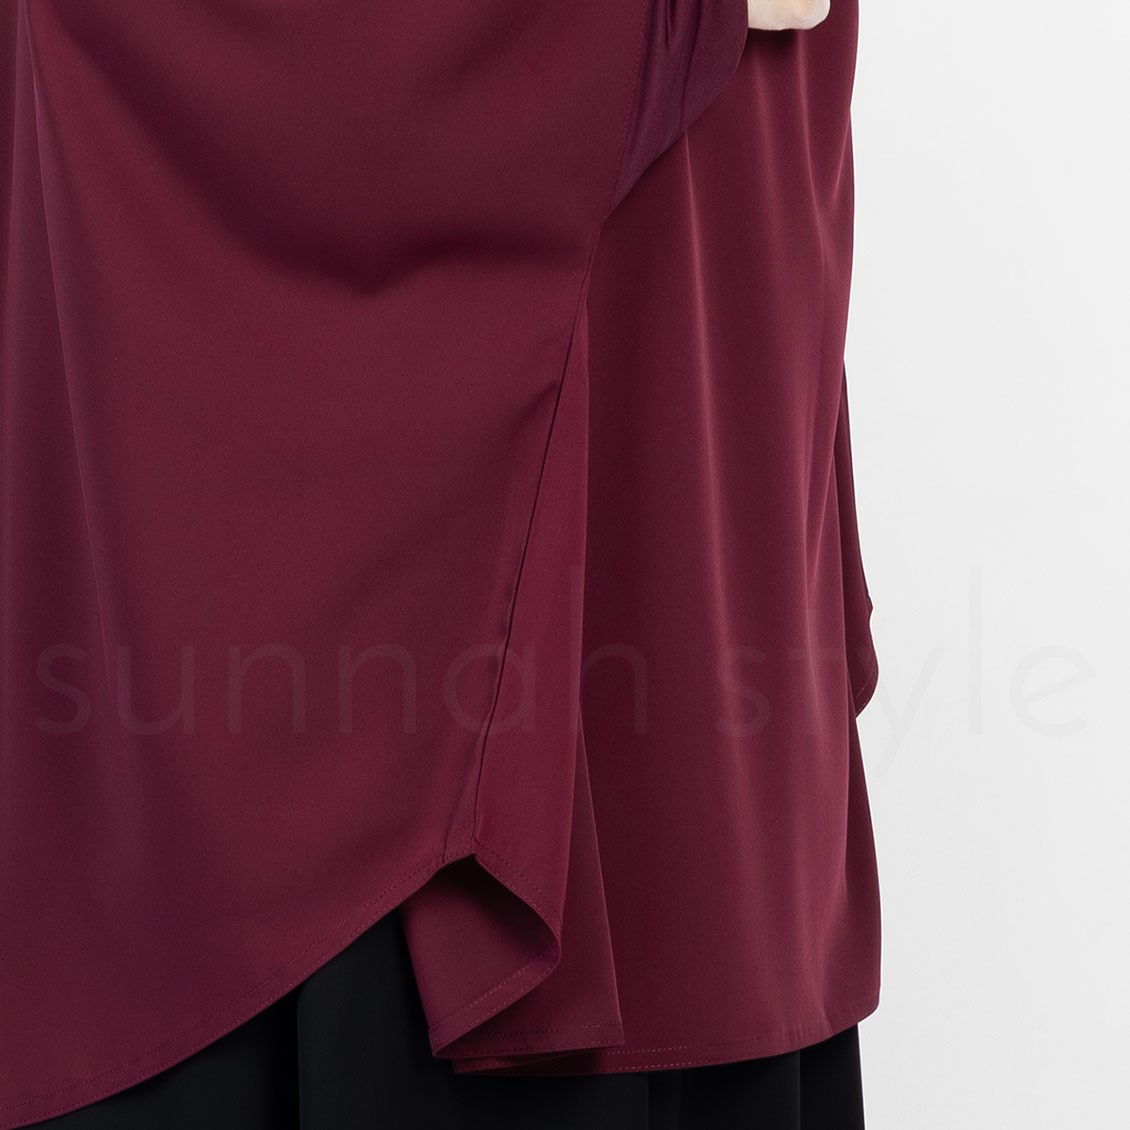 Sunnah Style Signature Jilbab Top Thigh Length Burgundy